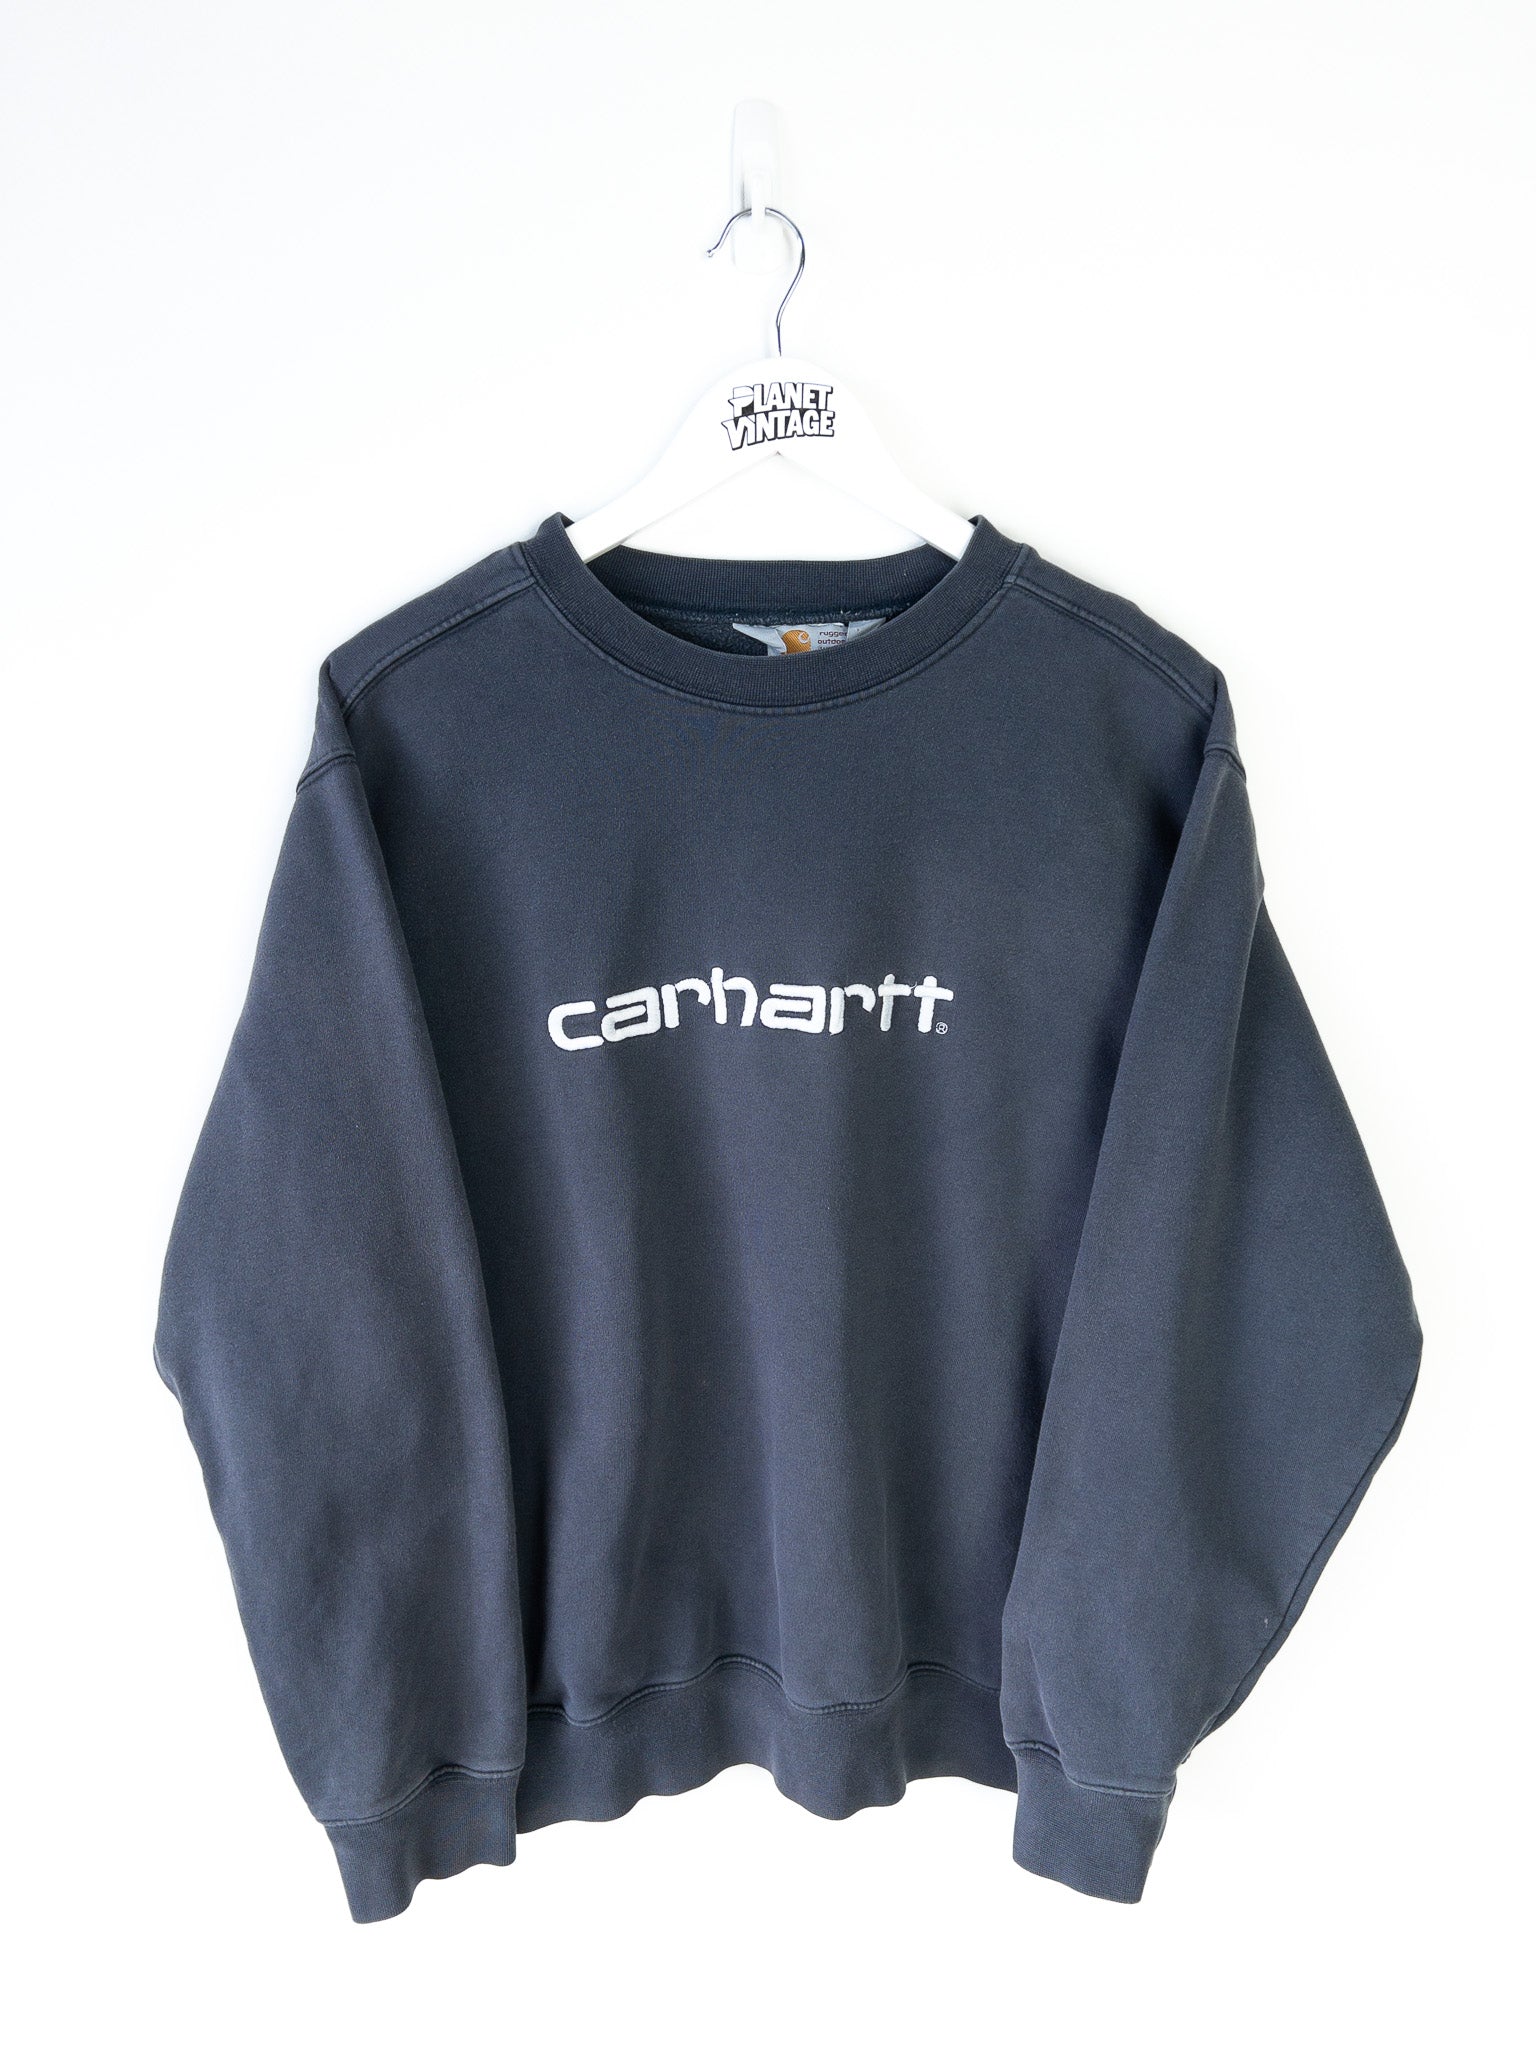 Vintage Carhartt Sweatshirt (L)